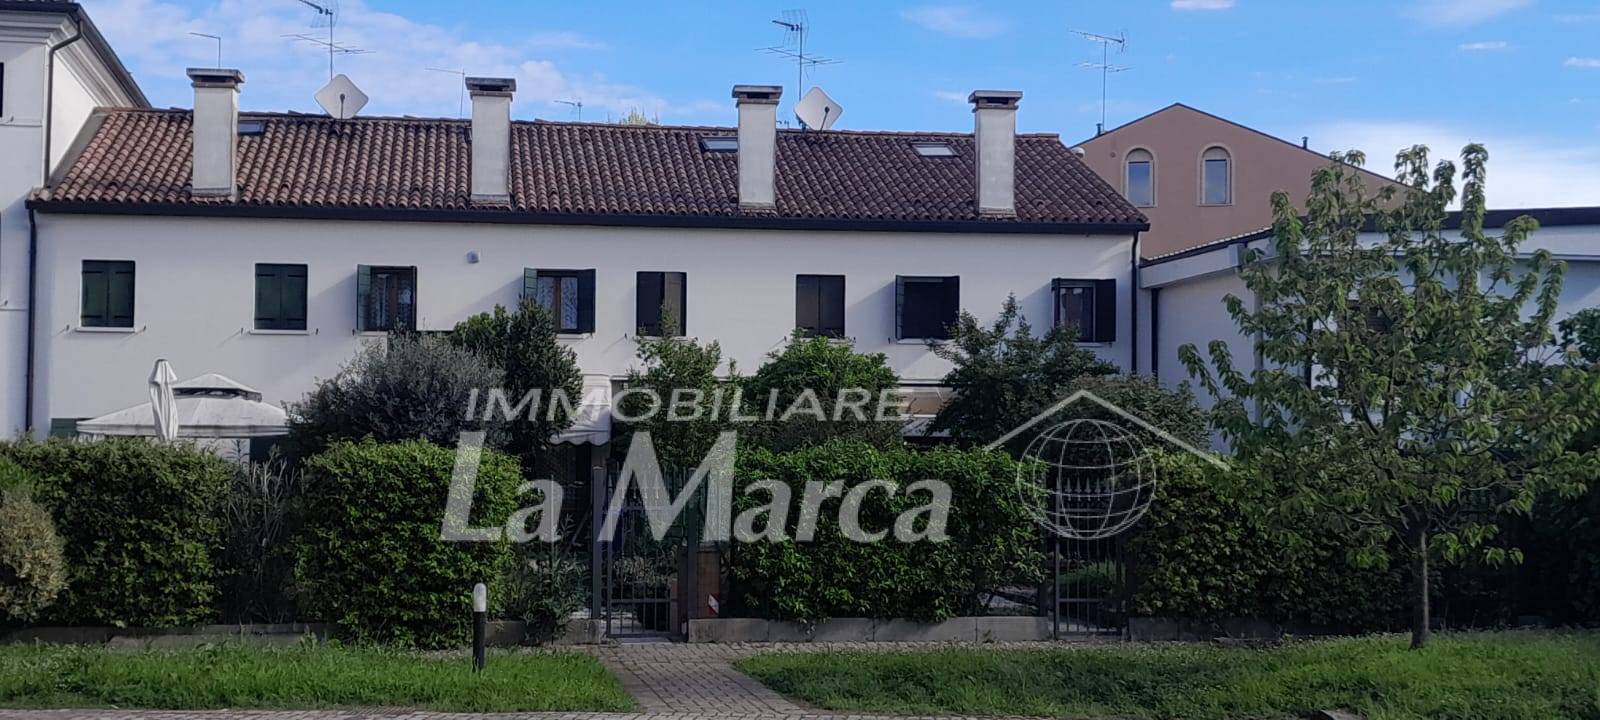 Casa indipendente con box, Treviso fiera